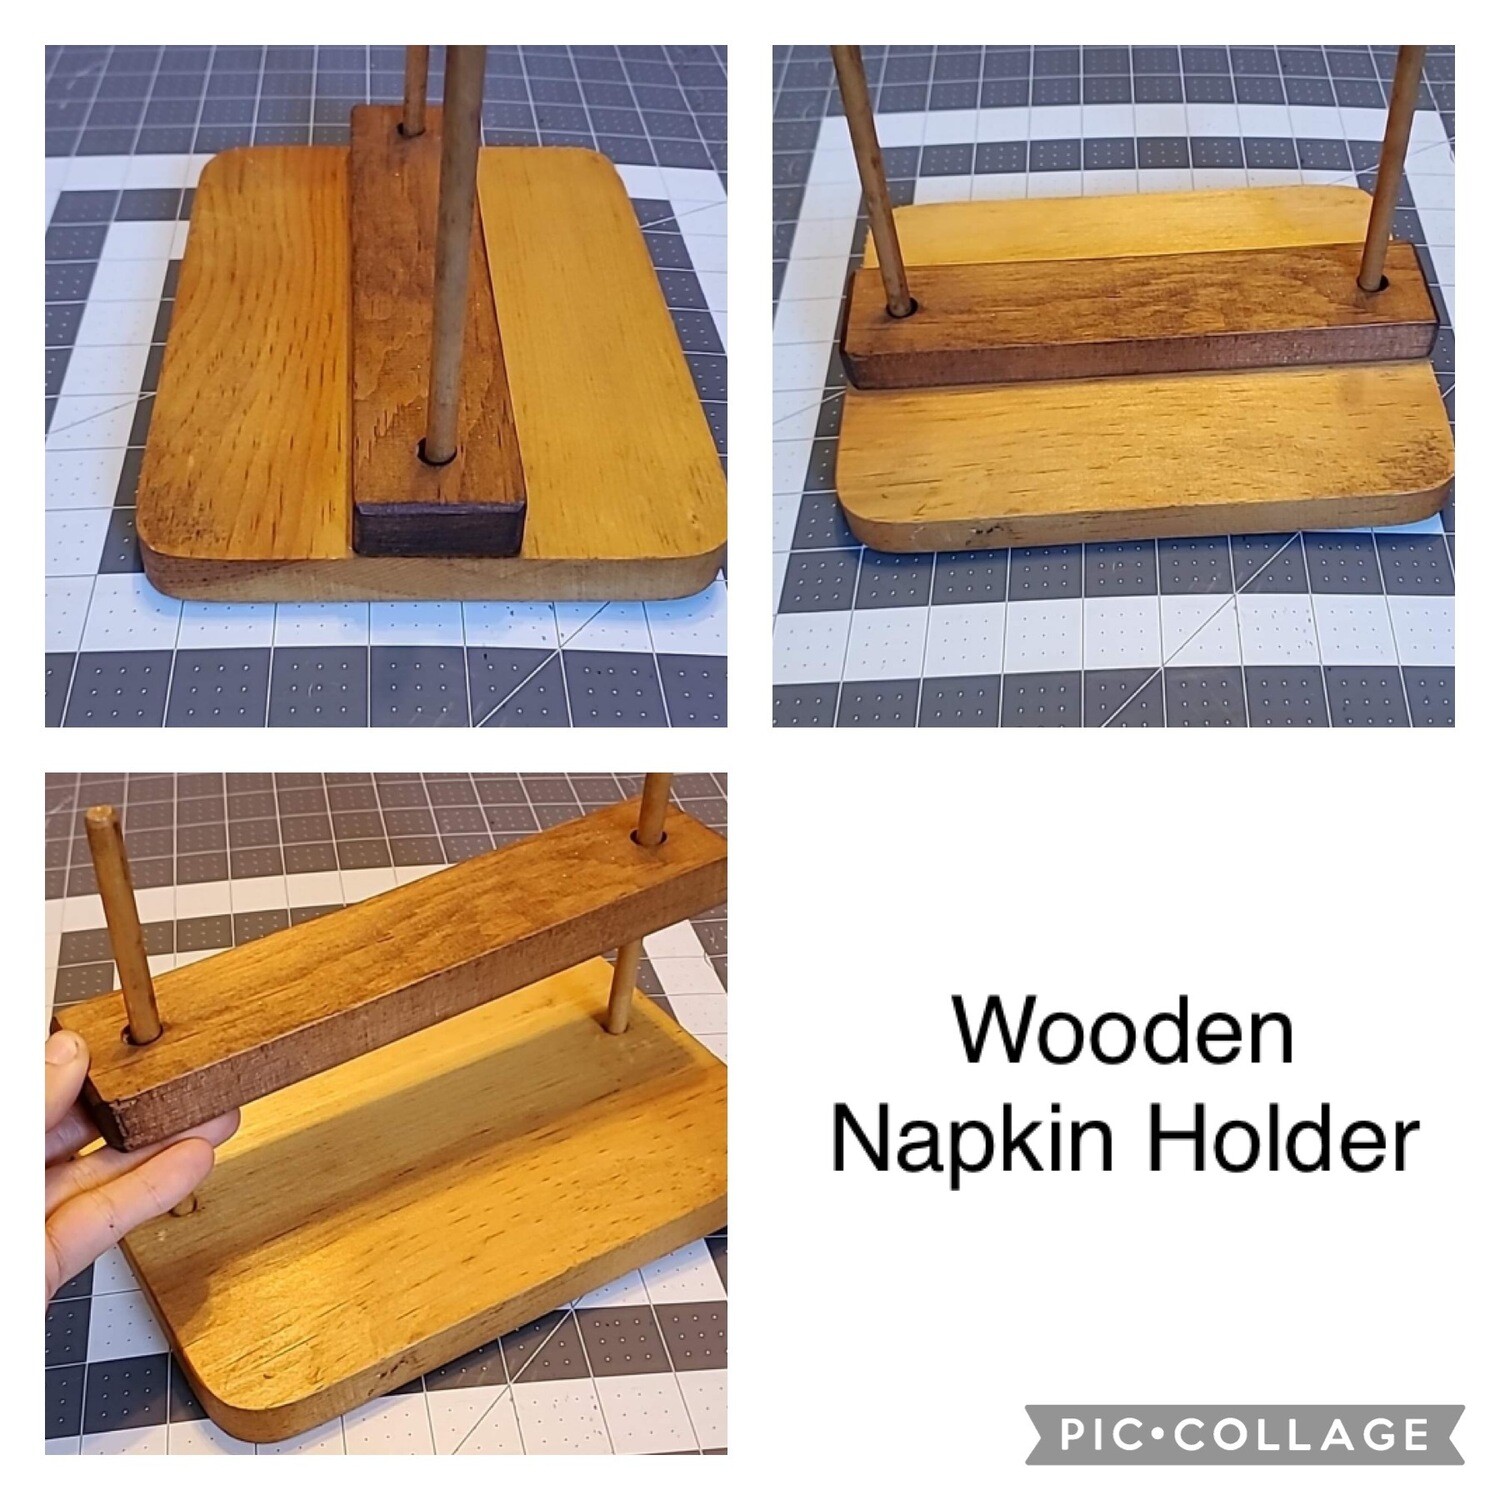 Wooden Napkin Holder